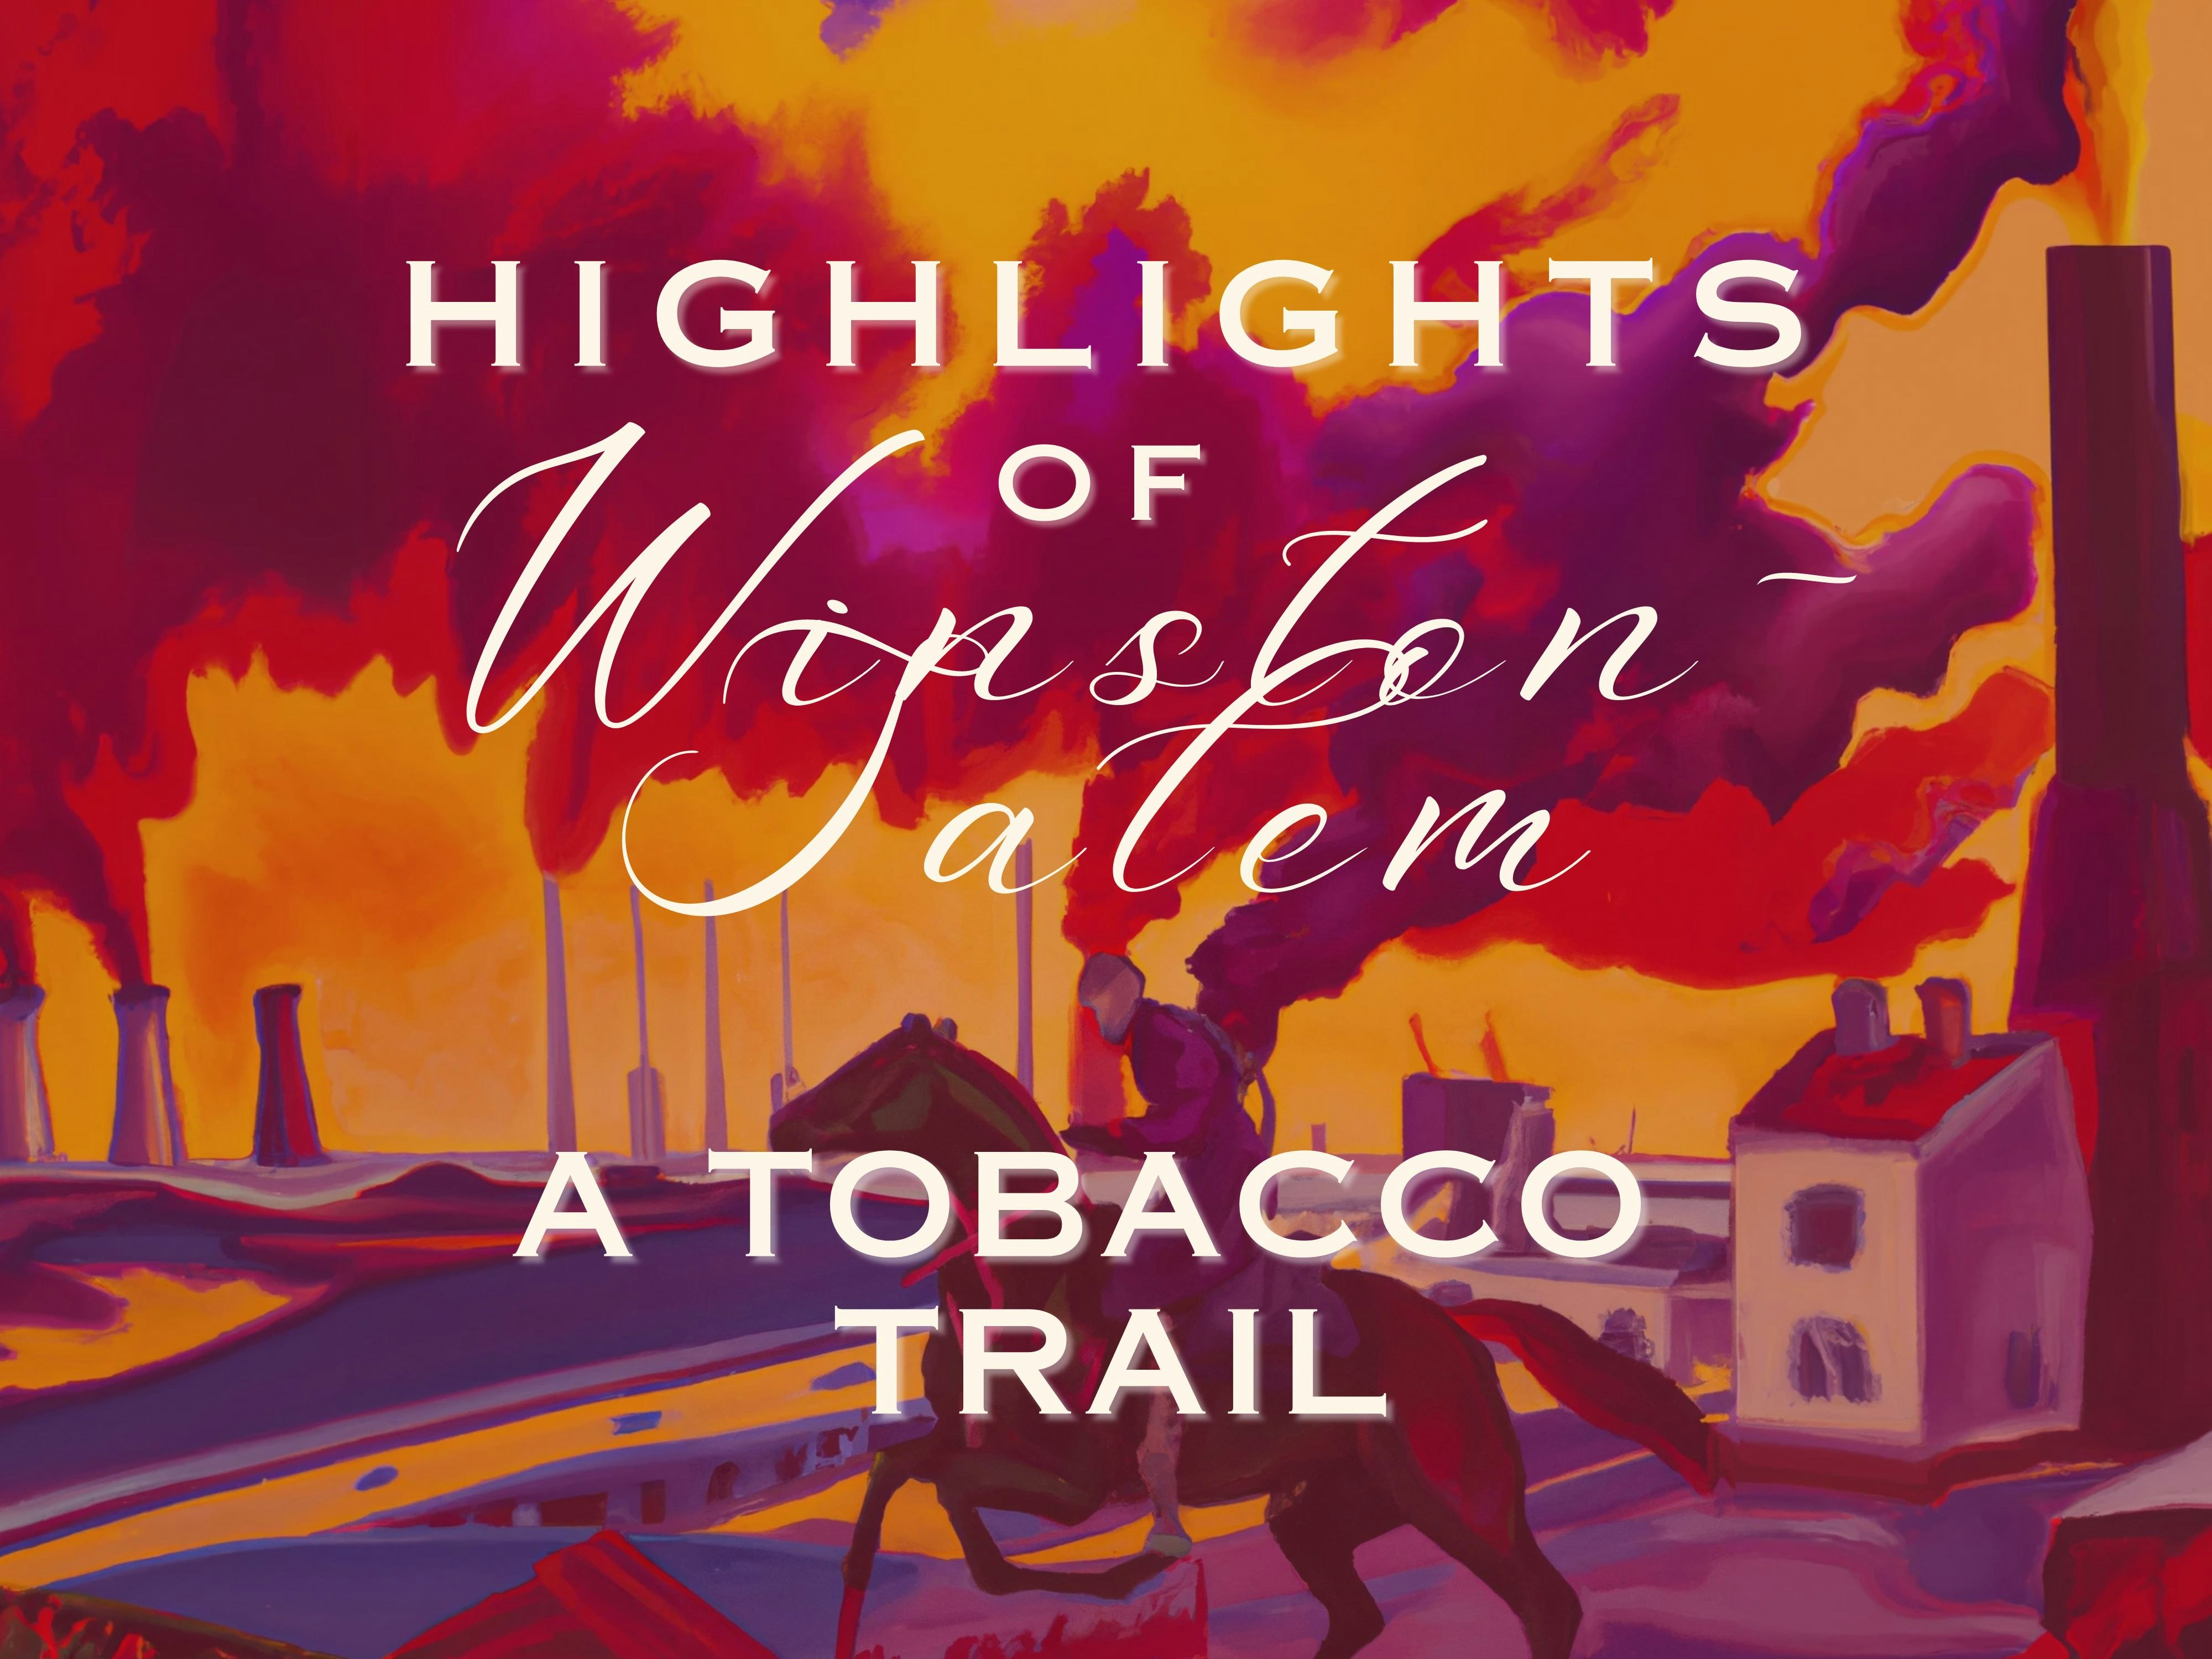 Highlights Winston-Salem: A Tobacco Trail